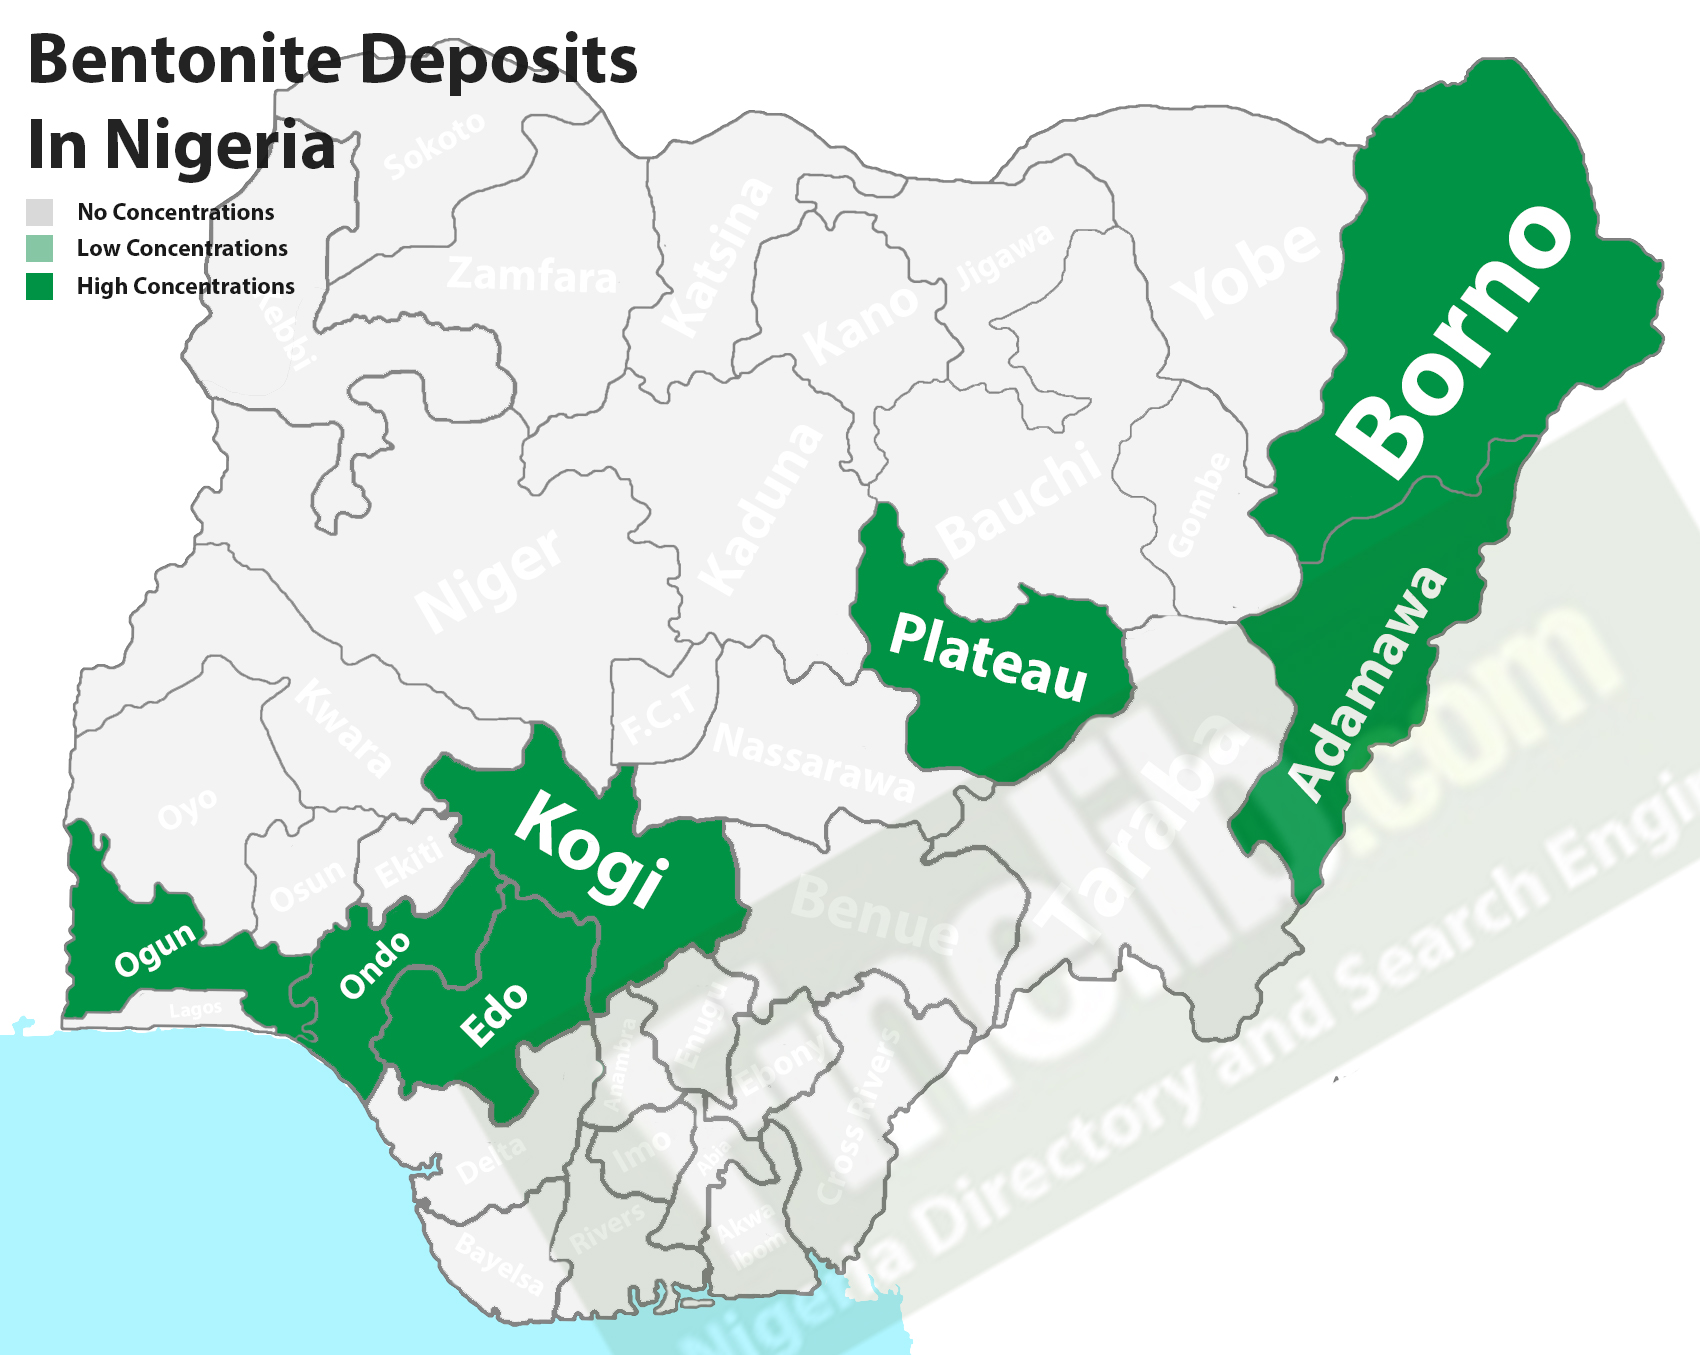 Bentonite clay deposits in Nigeria